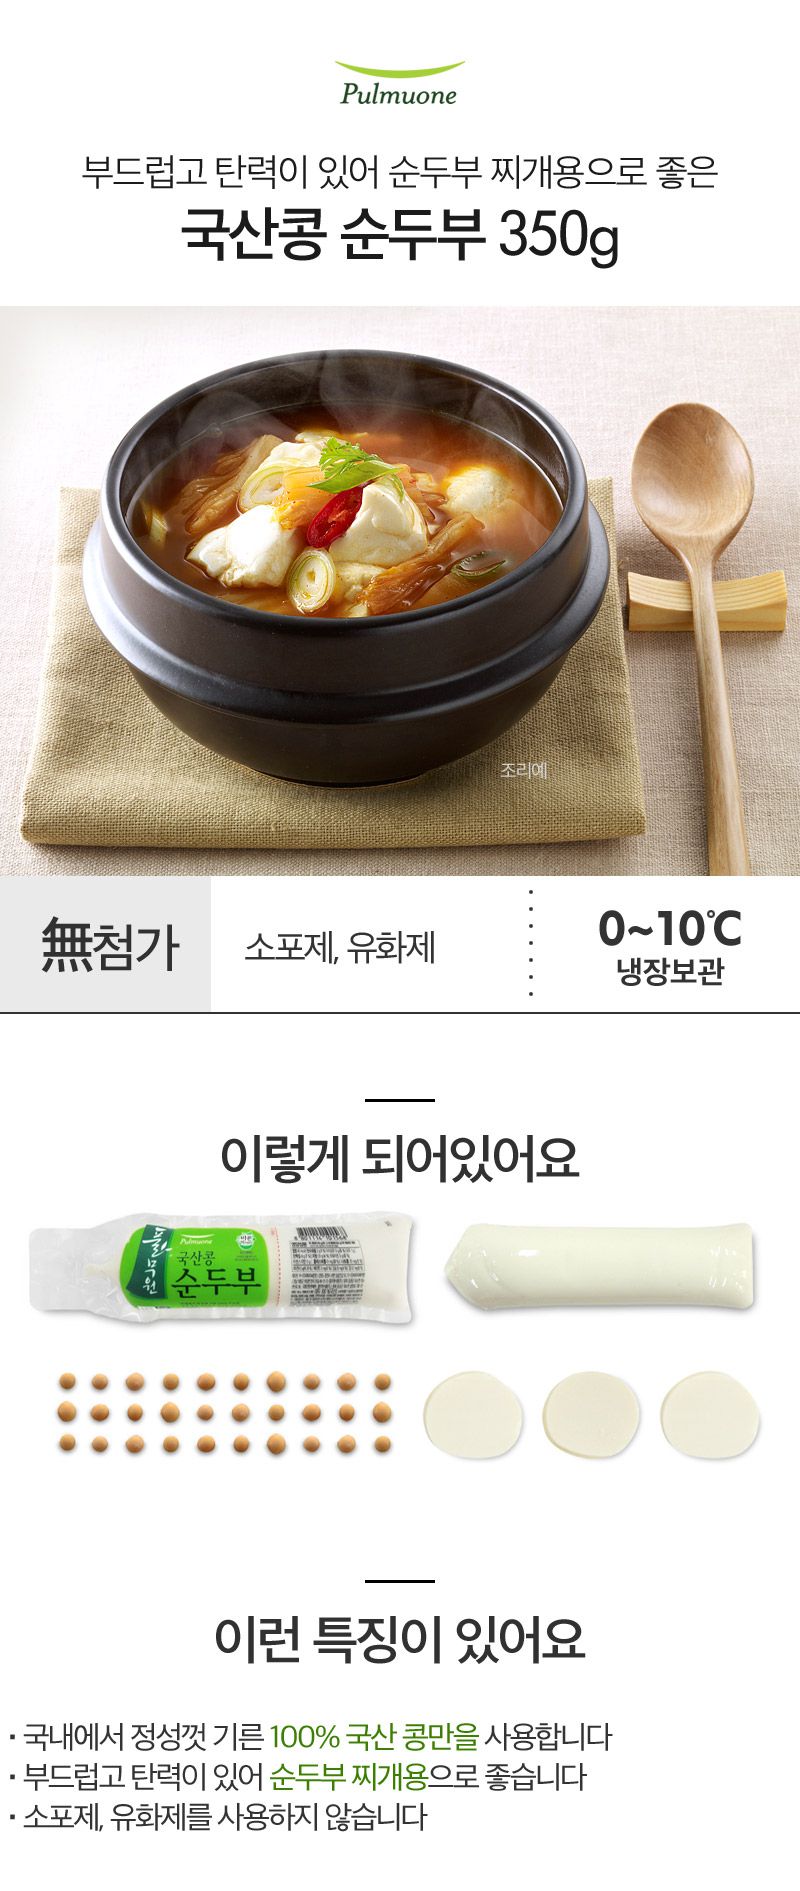 韓國食品-[Pulmuone] Soft Tofu 350g